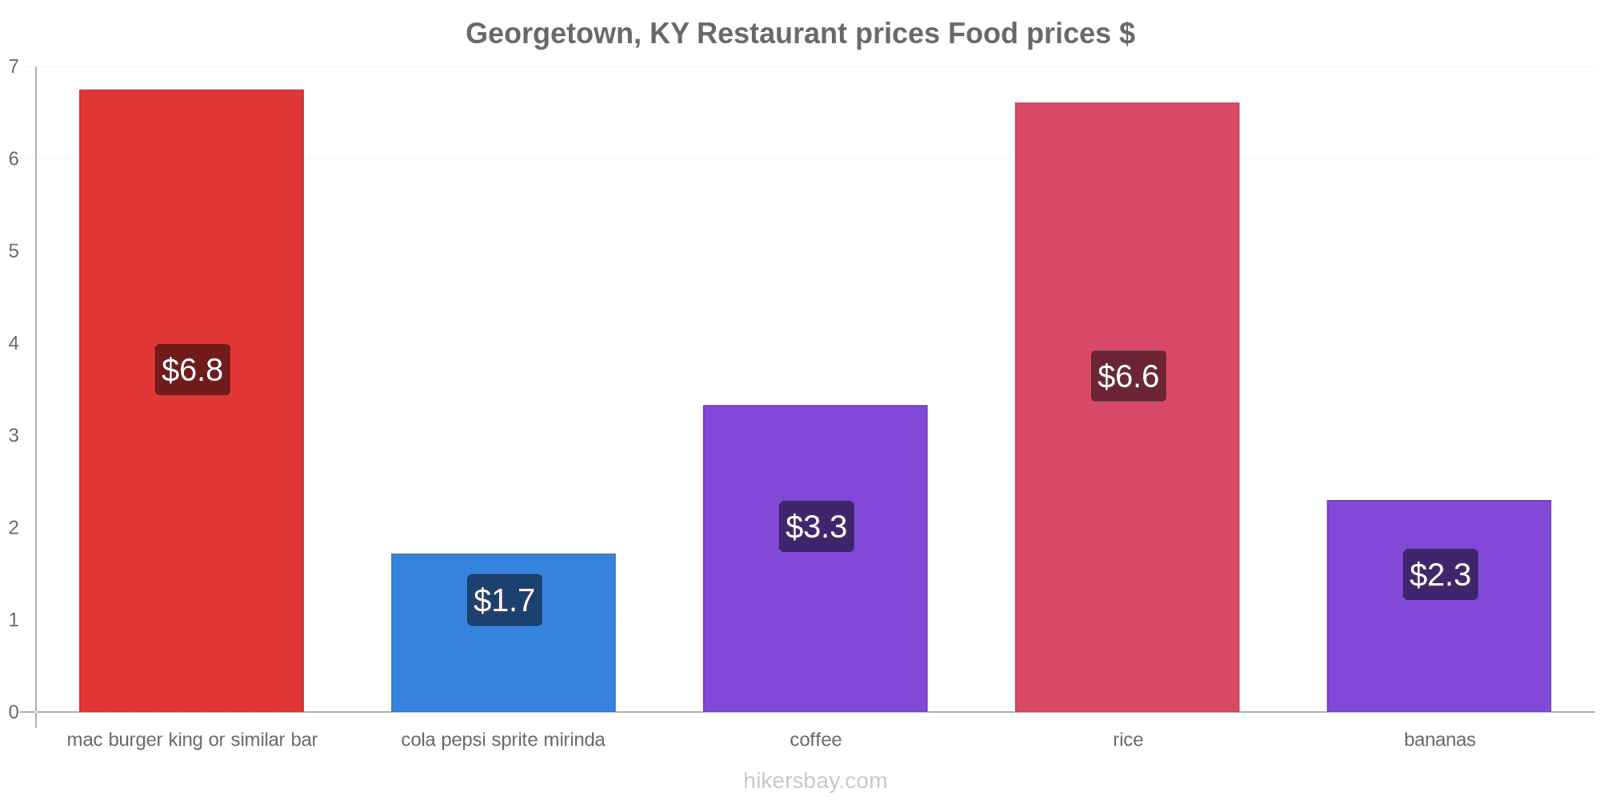 Georgetown, KY price changes hikersbay.com